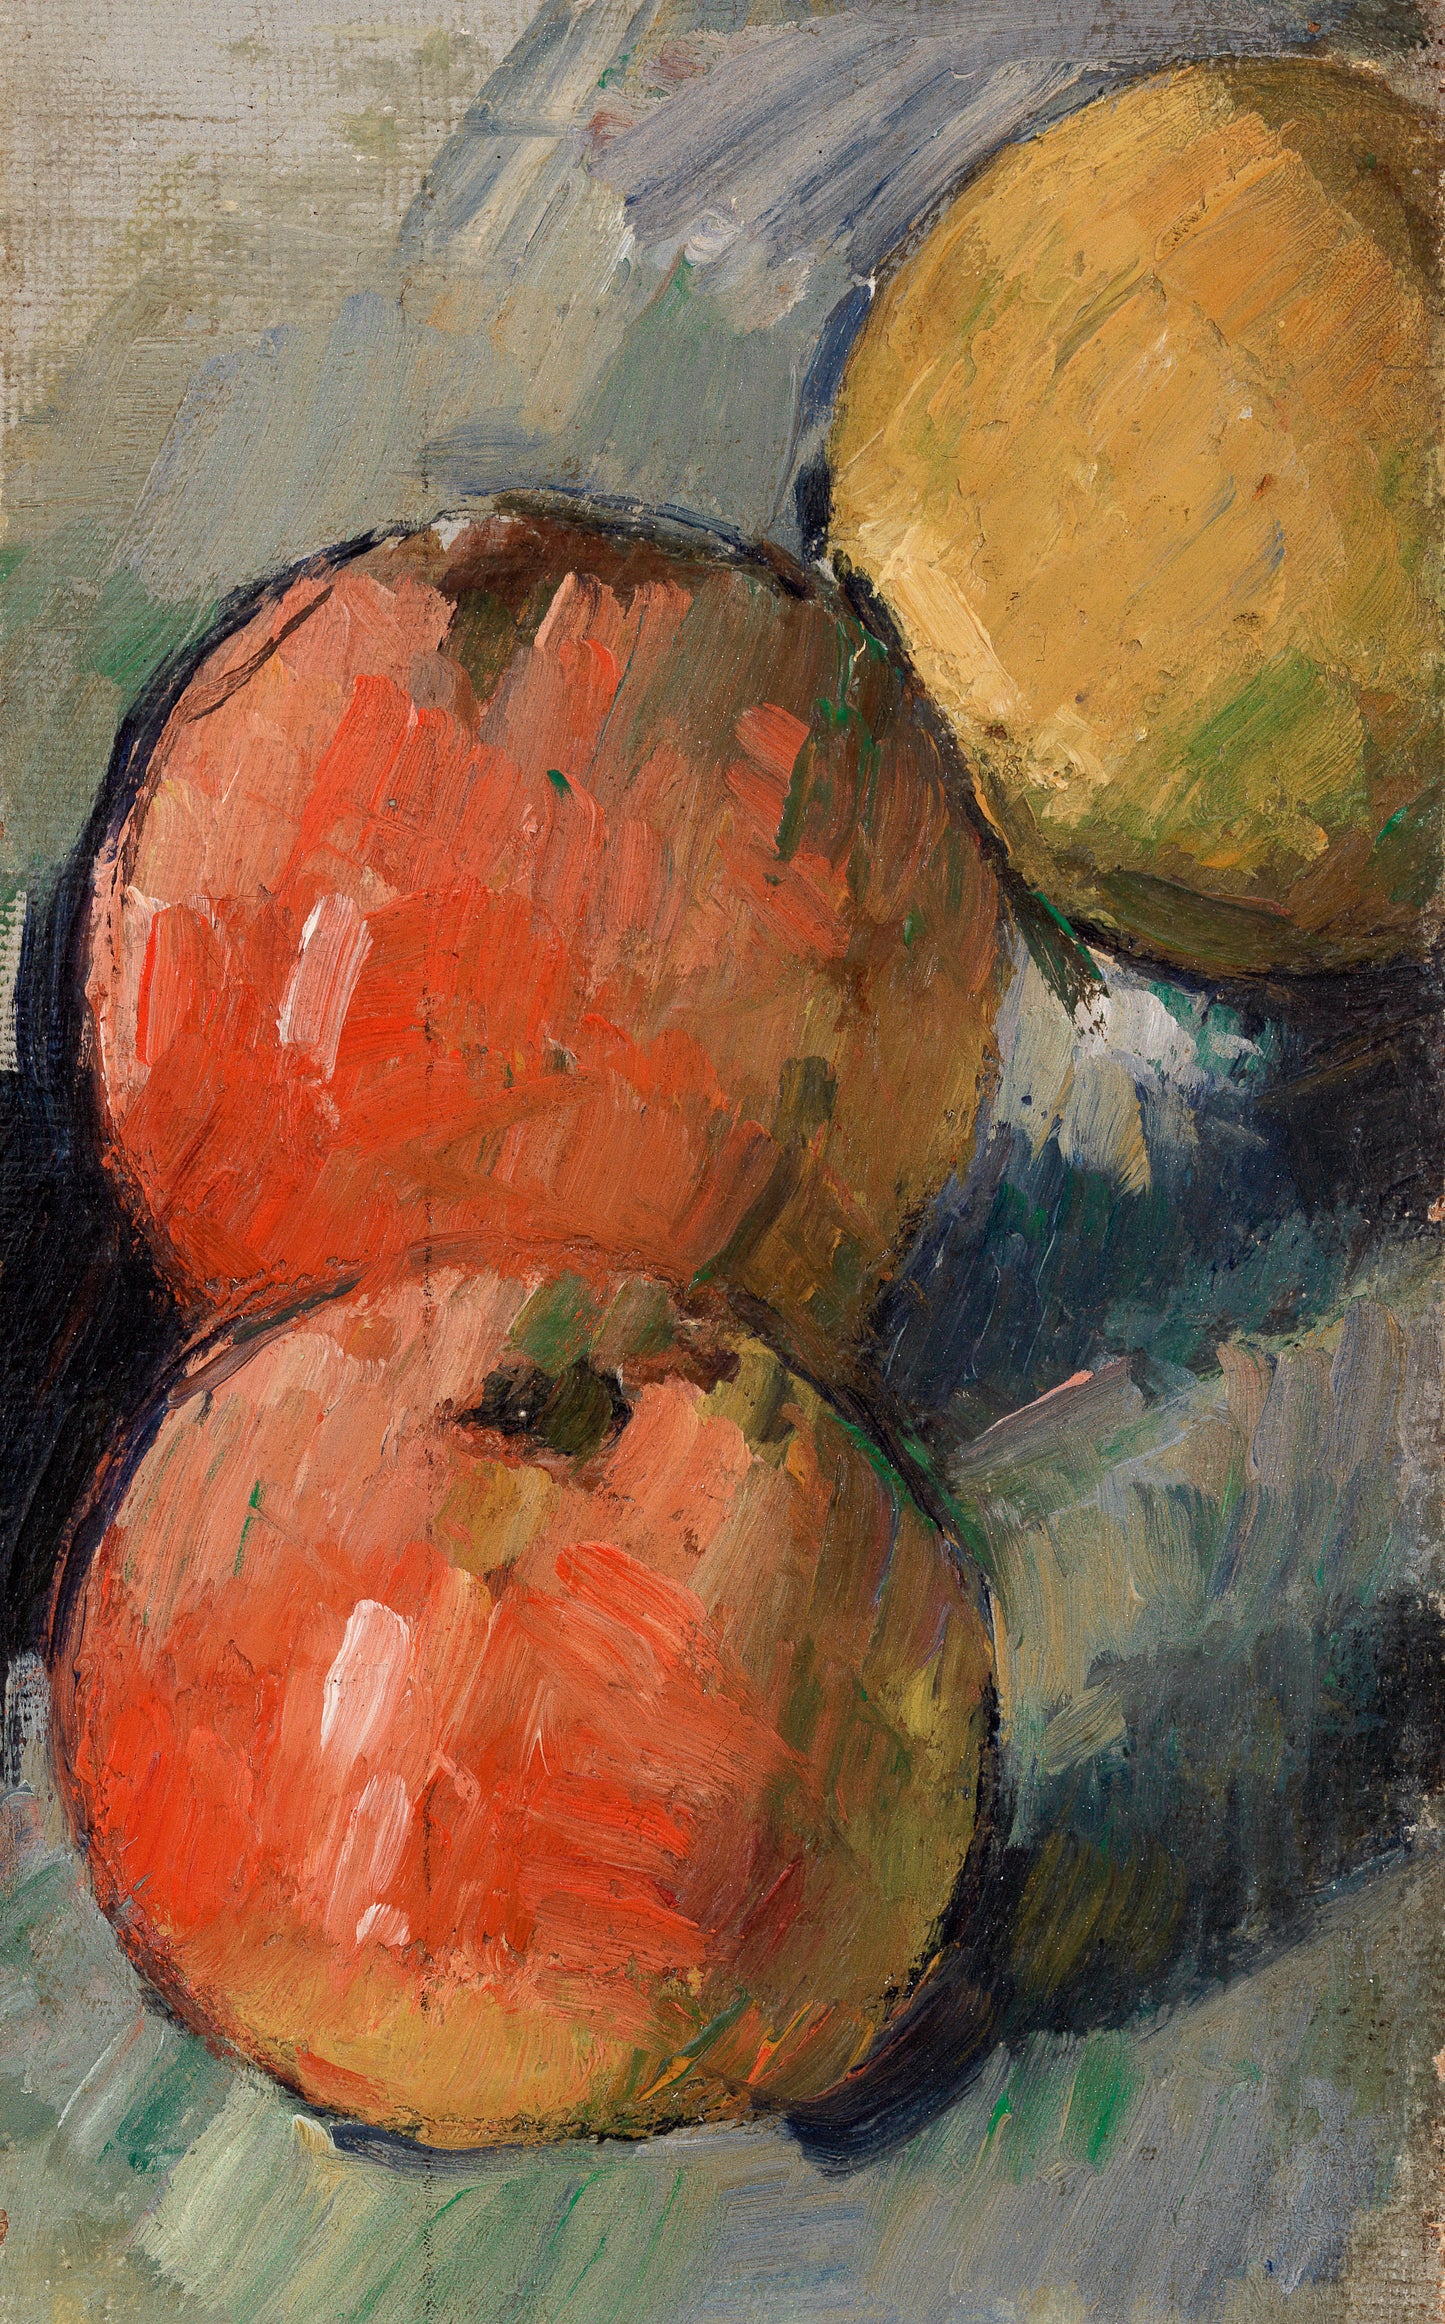 Paul Cezanne - Three Apples 1878 - Digital Art - JPG File Download